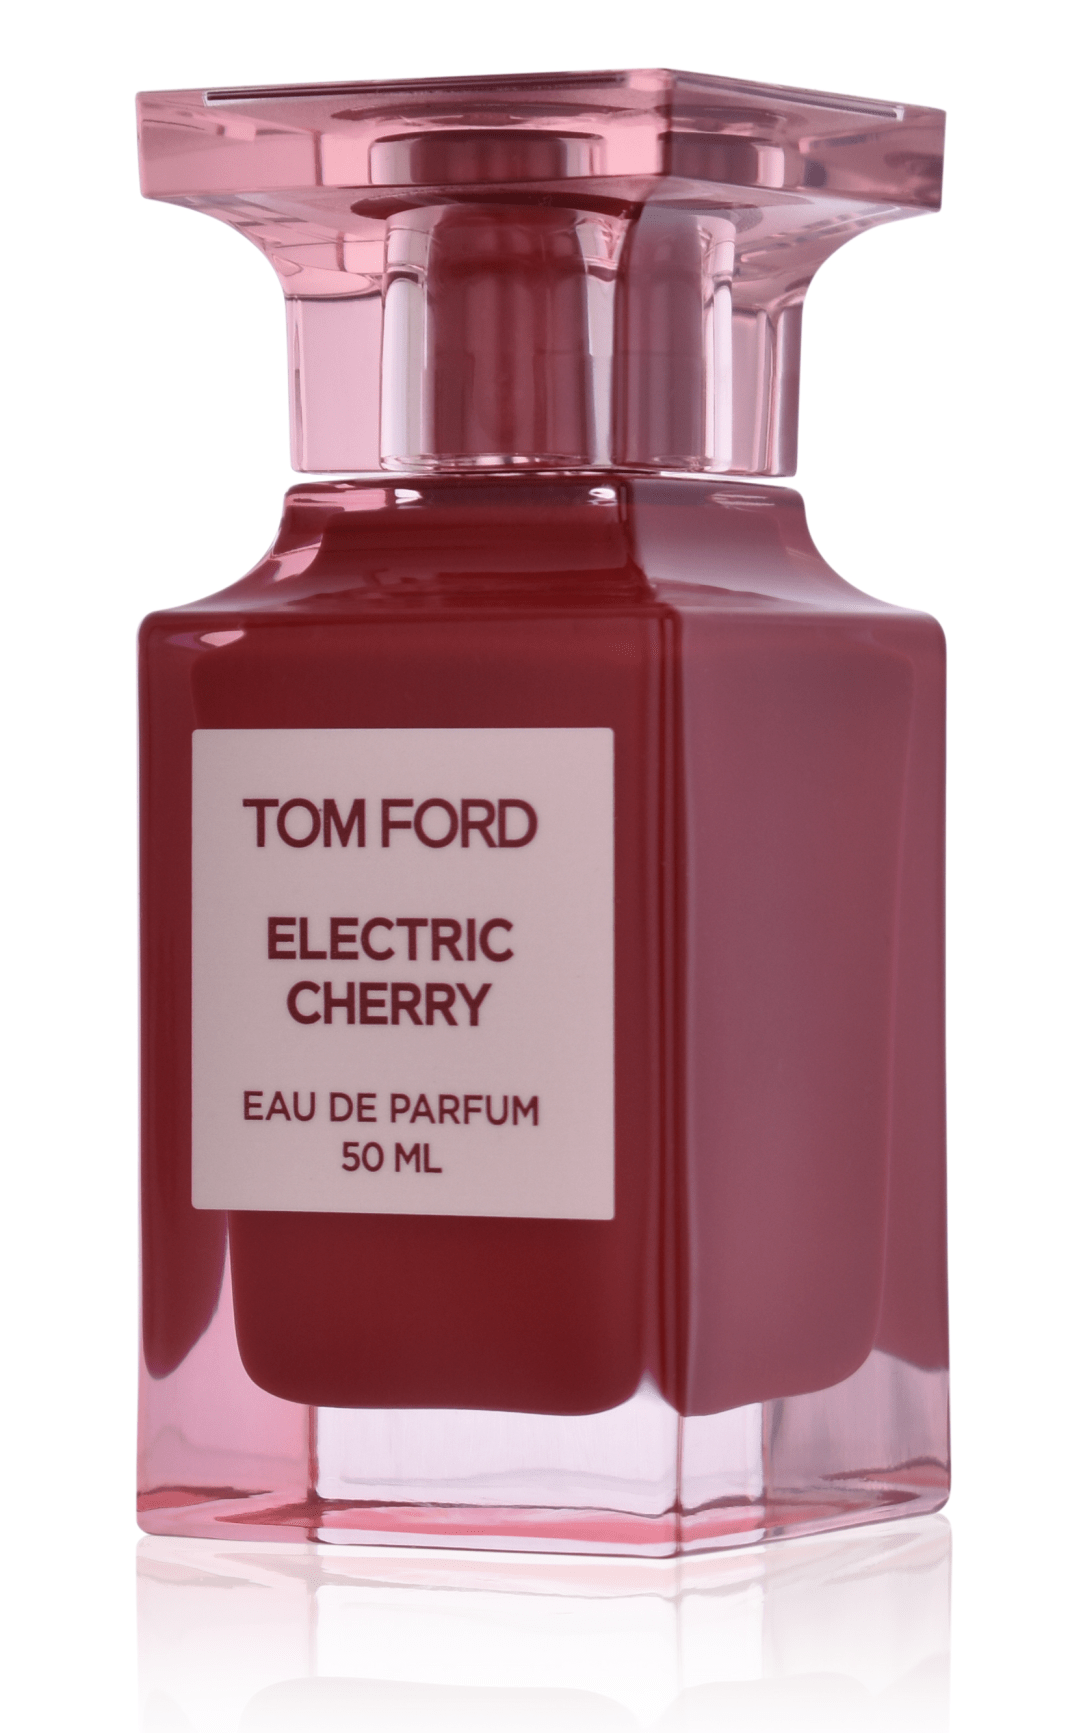 Tom Ford Electric Cherry 50 ml Eau de Parfum   